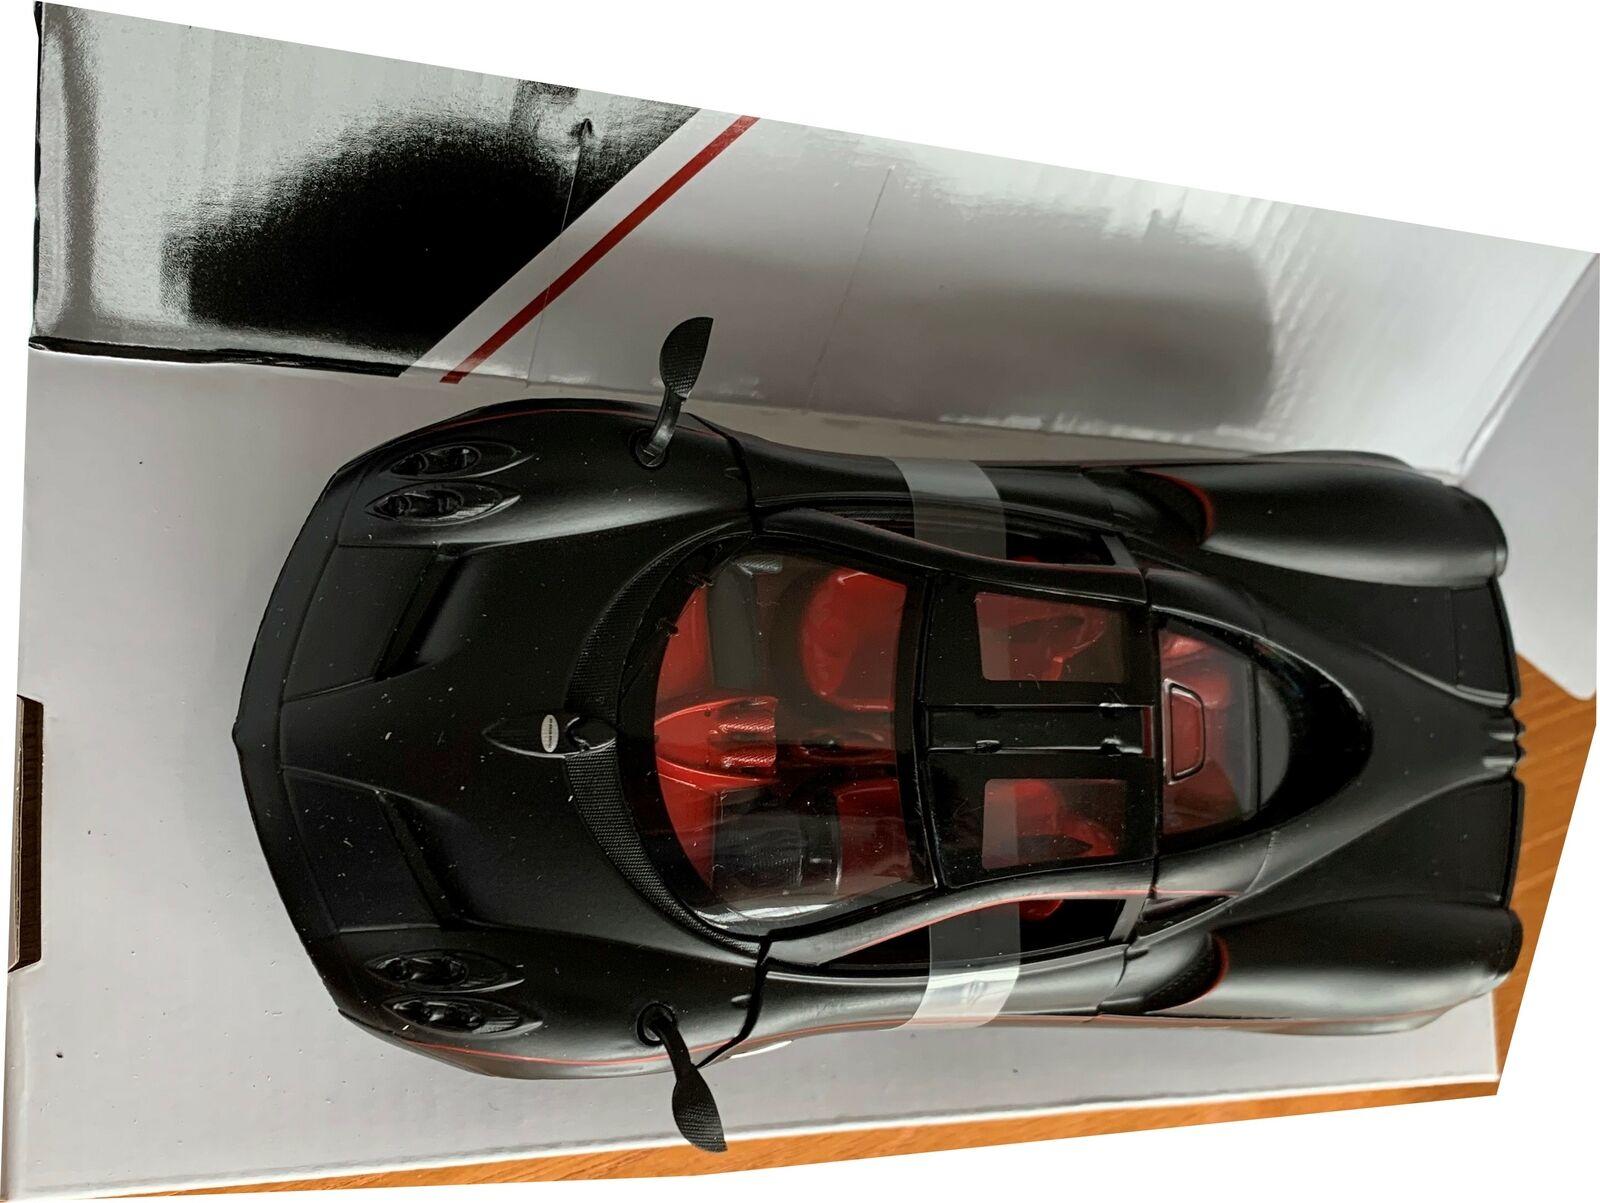 Pagani Huayra in matt black 1:24 scale diecast sports car model from motormax